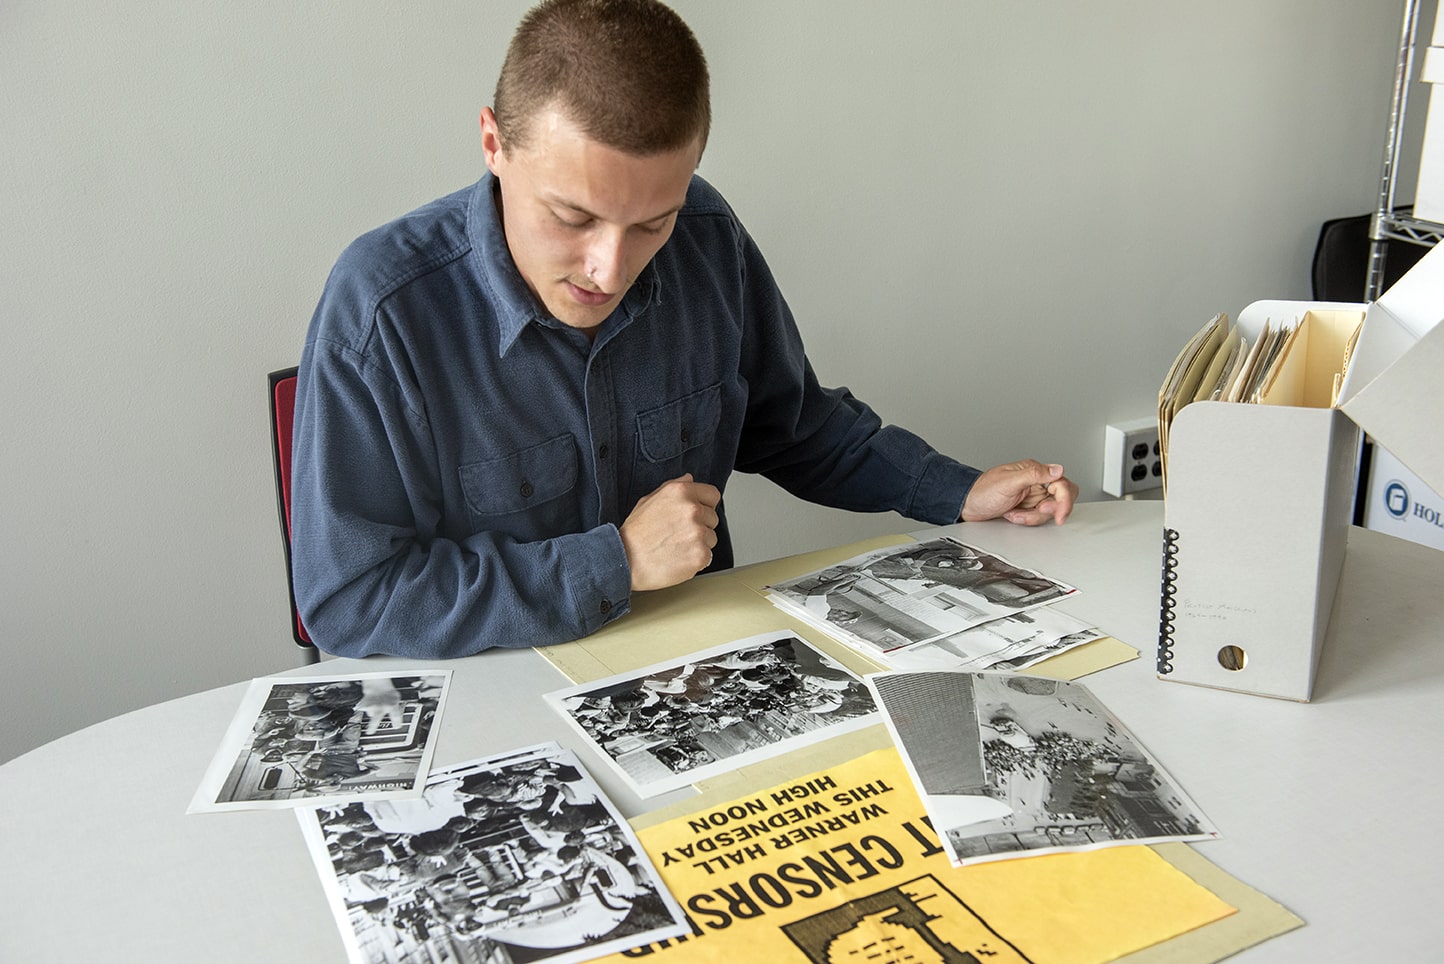 Nick Mlakar looking at photos on a desk